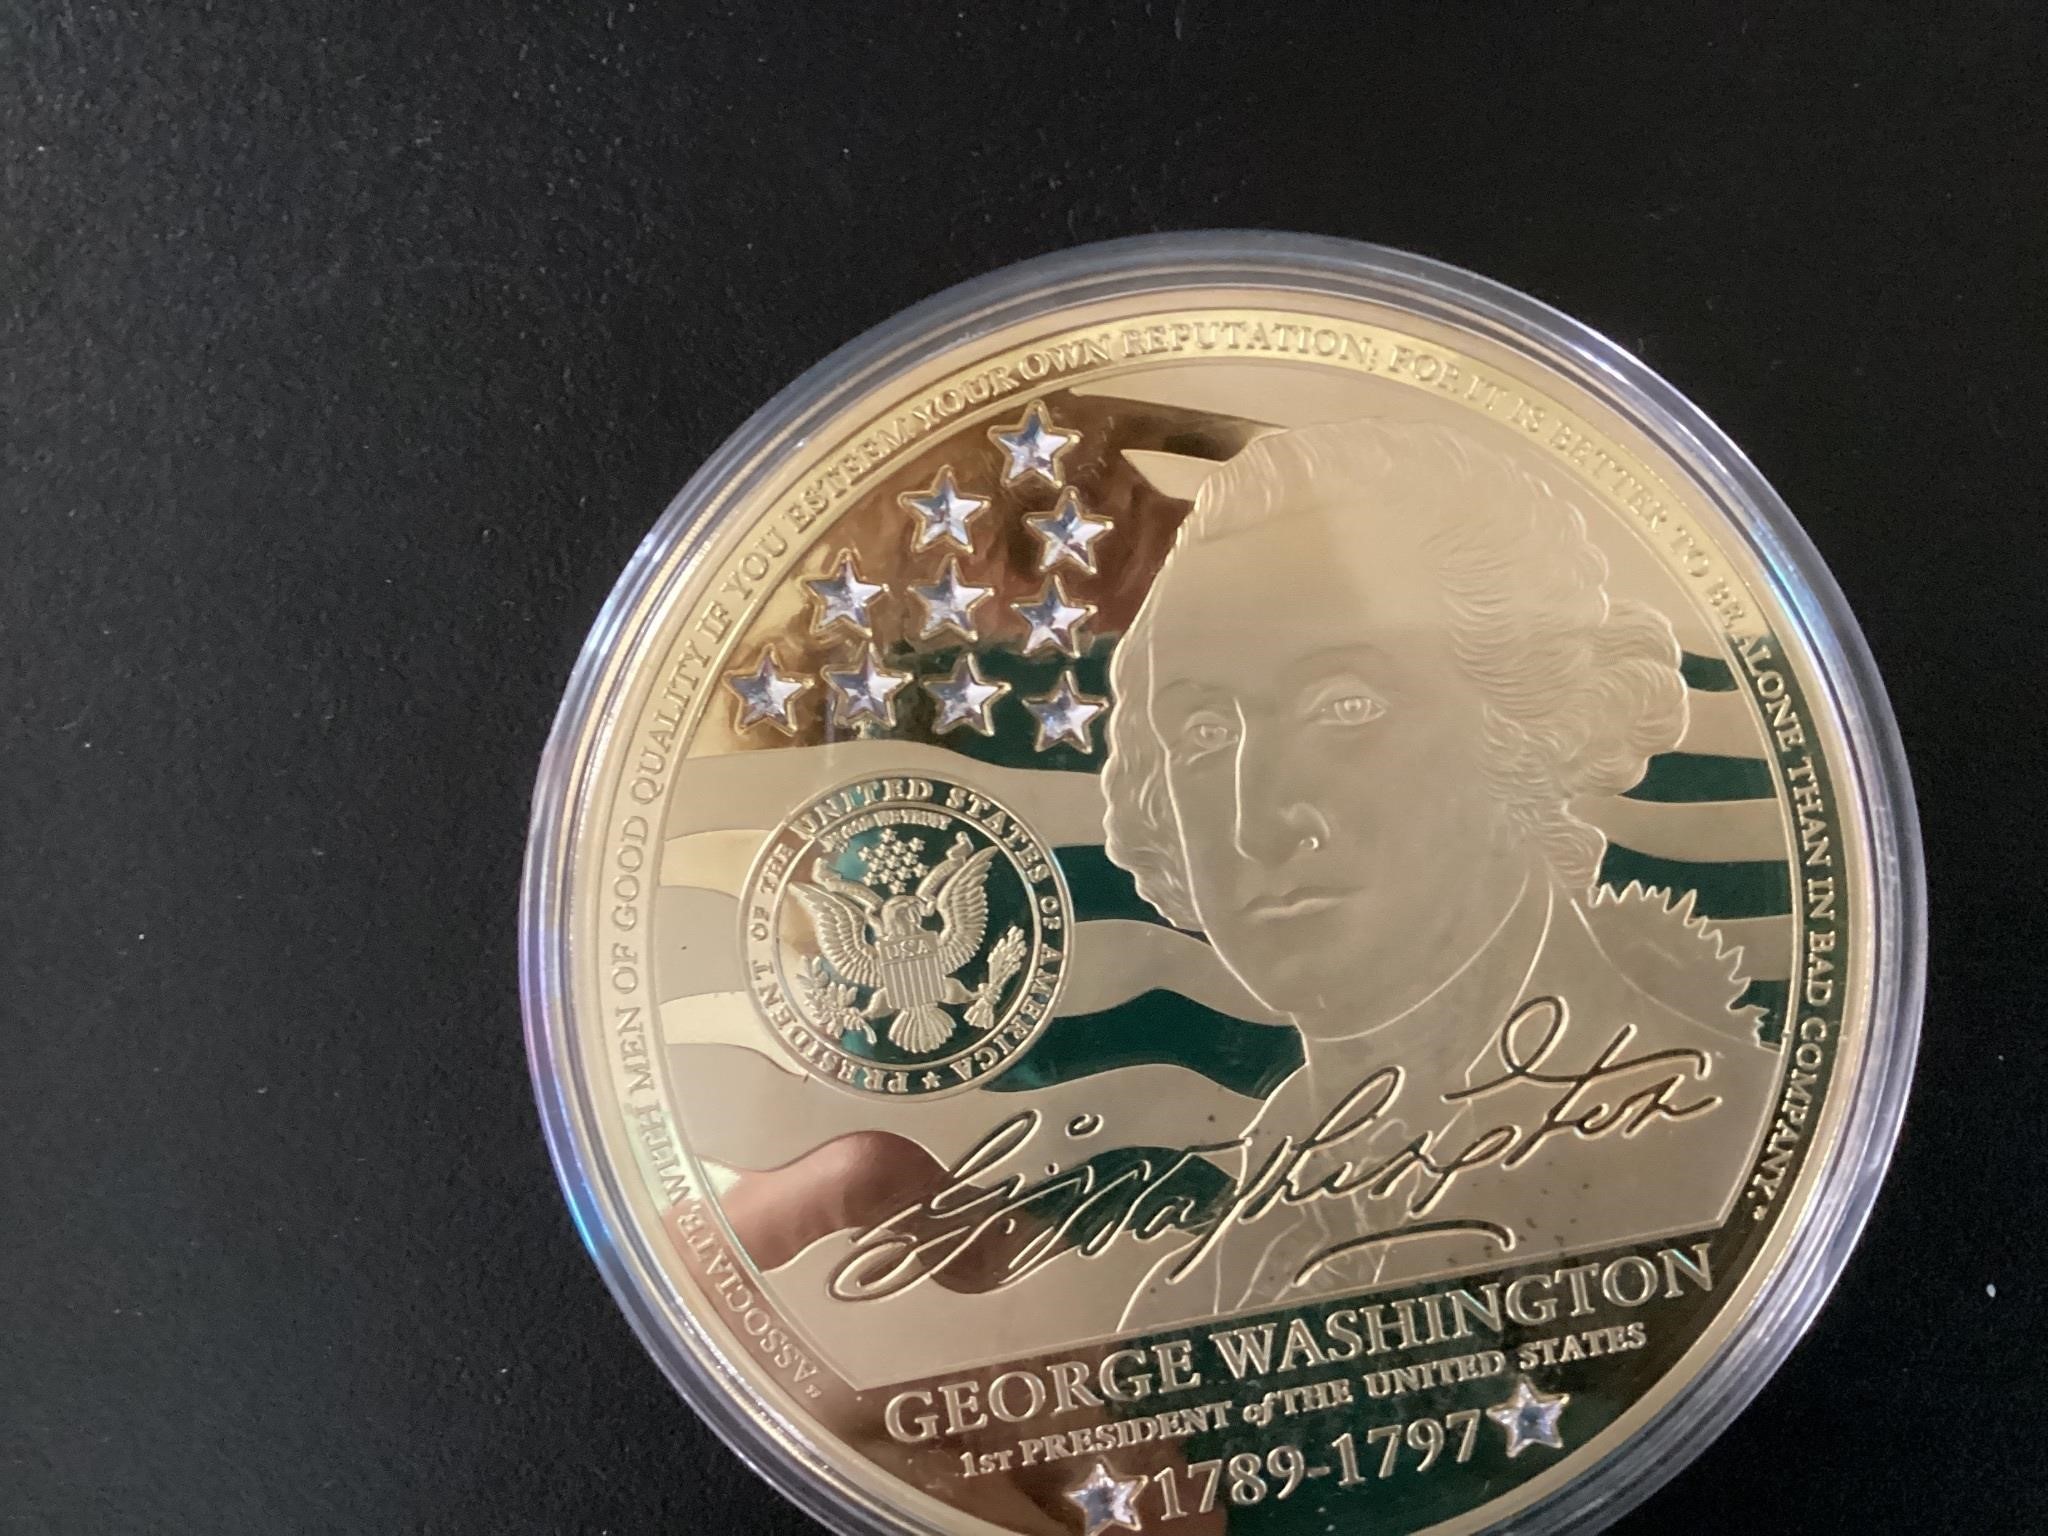 4” 24K GOLD PLATED GEORGE WASHINGTON MEDAL